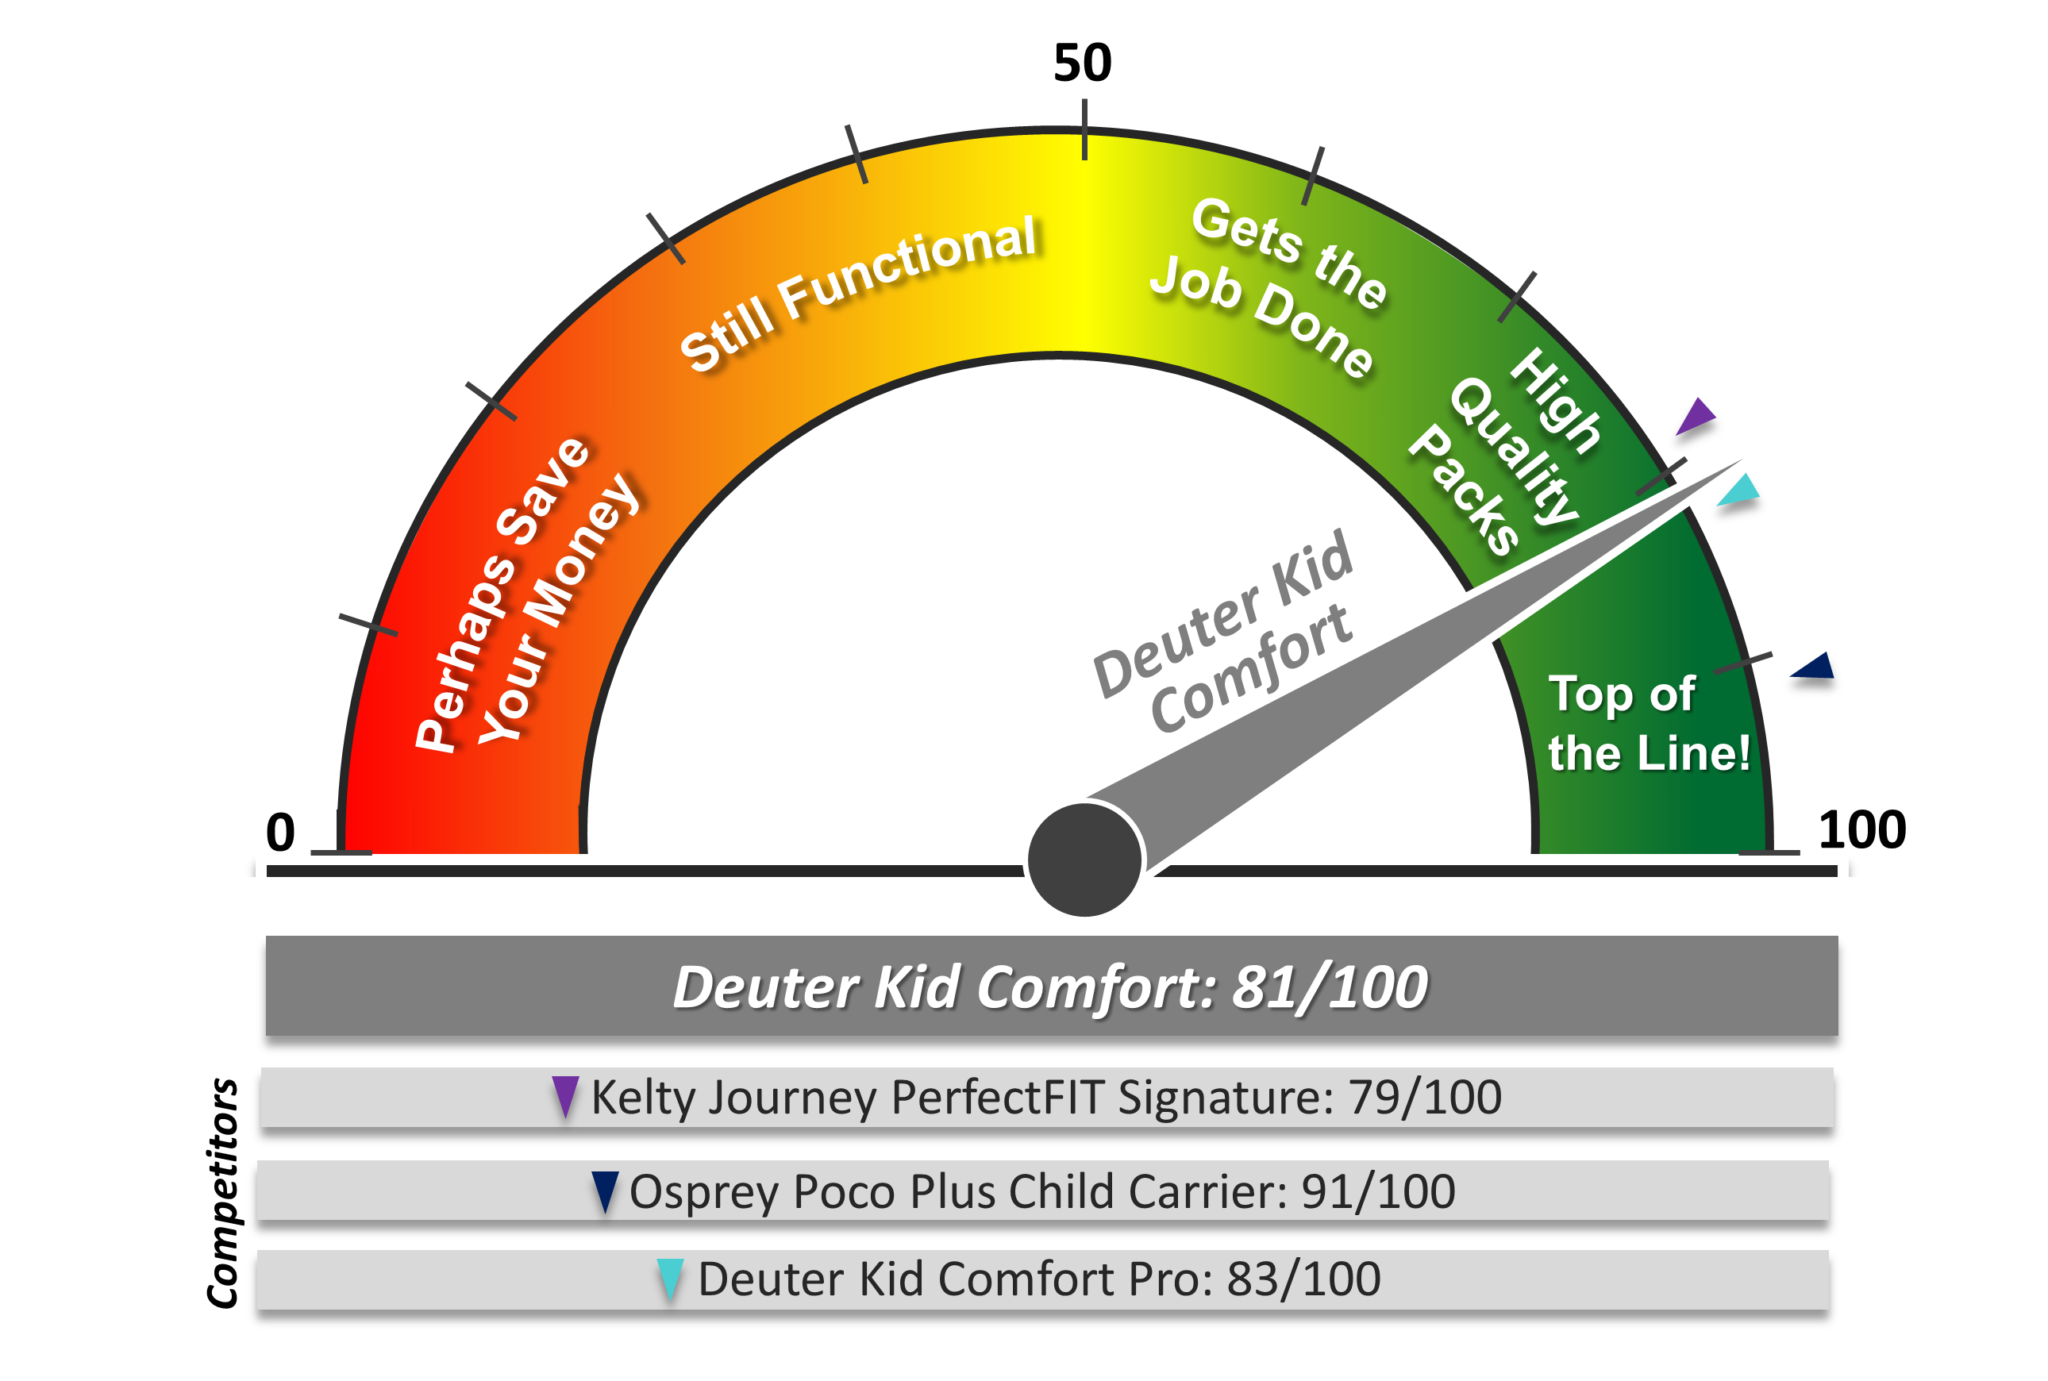 Deuter Kid Comfort dial diagram showing overall rating